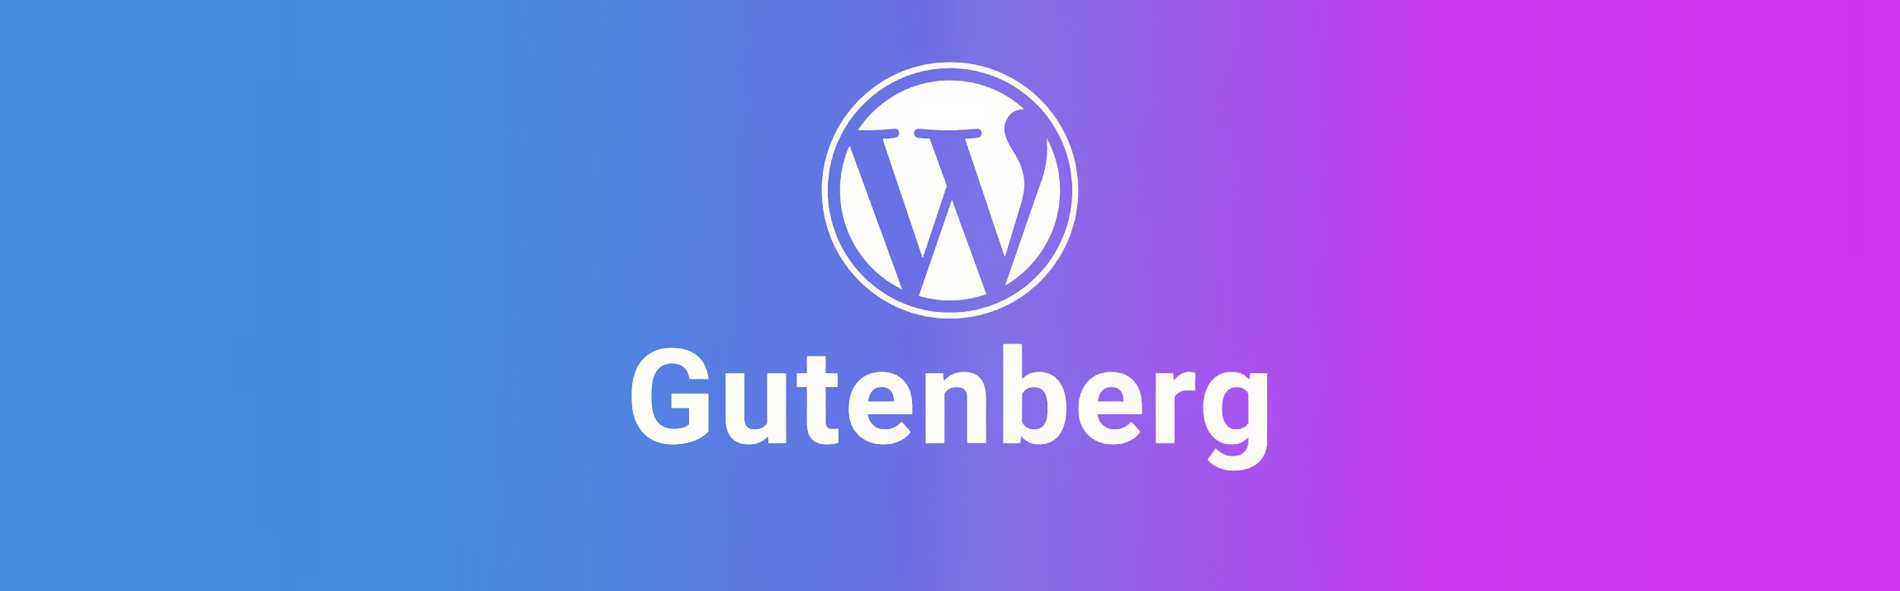 Kompletná anatómia WordPress editora Gutenberg